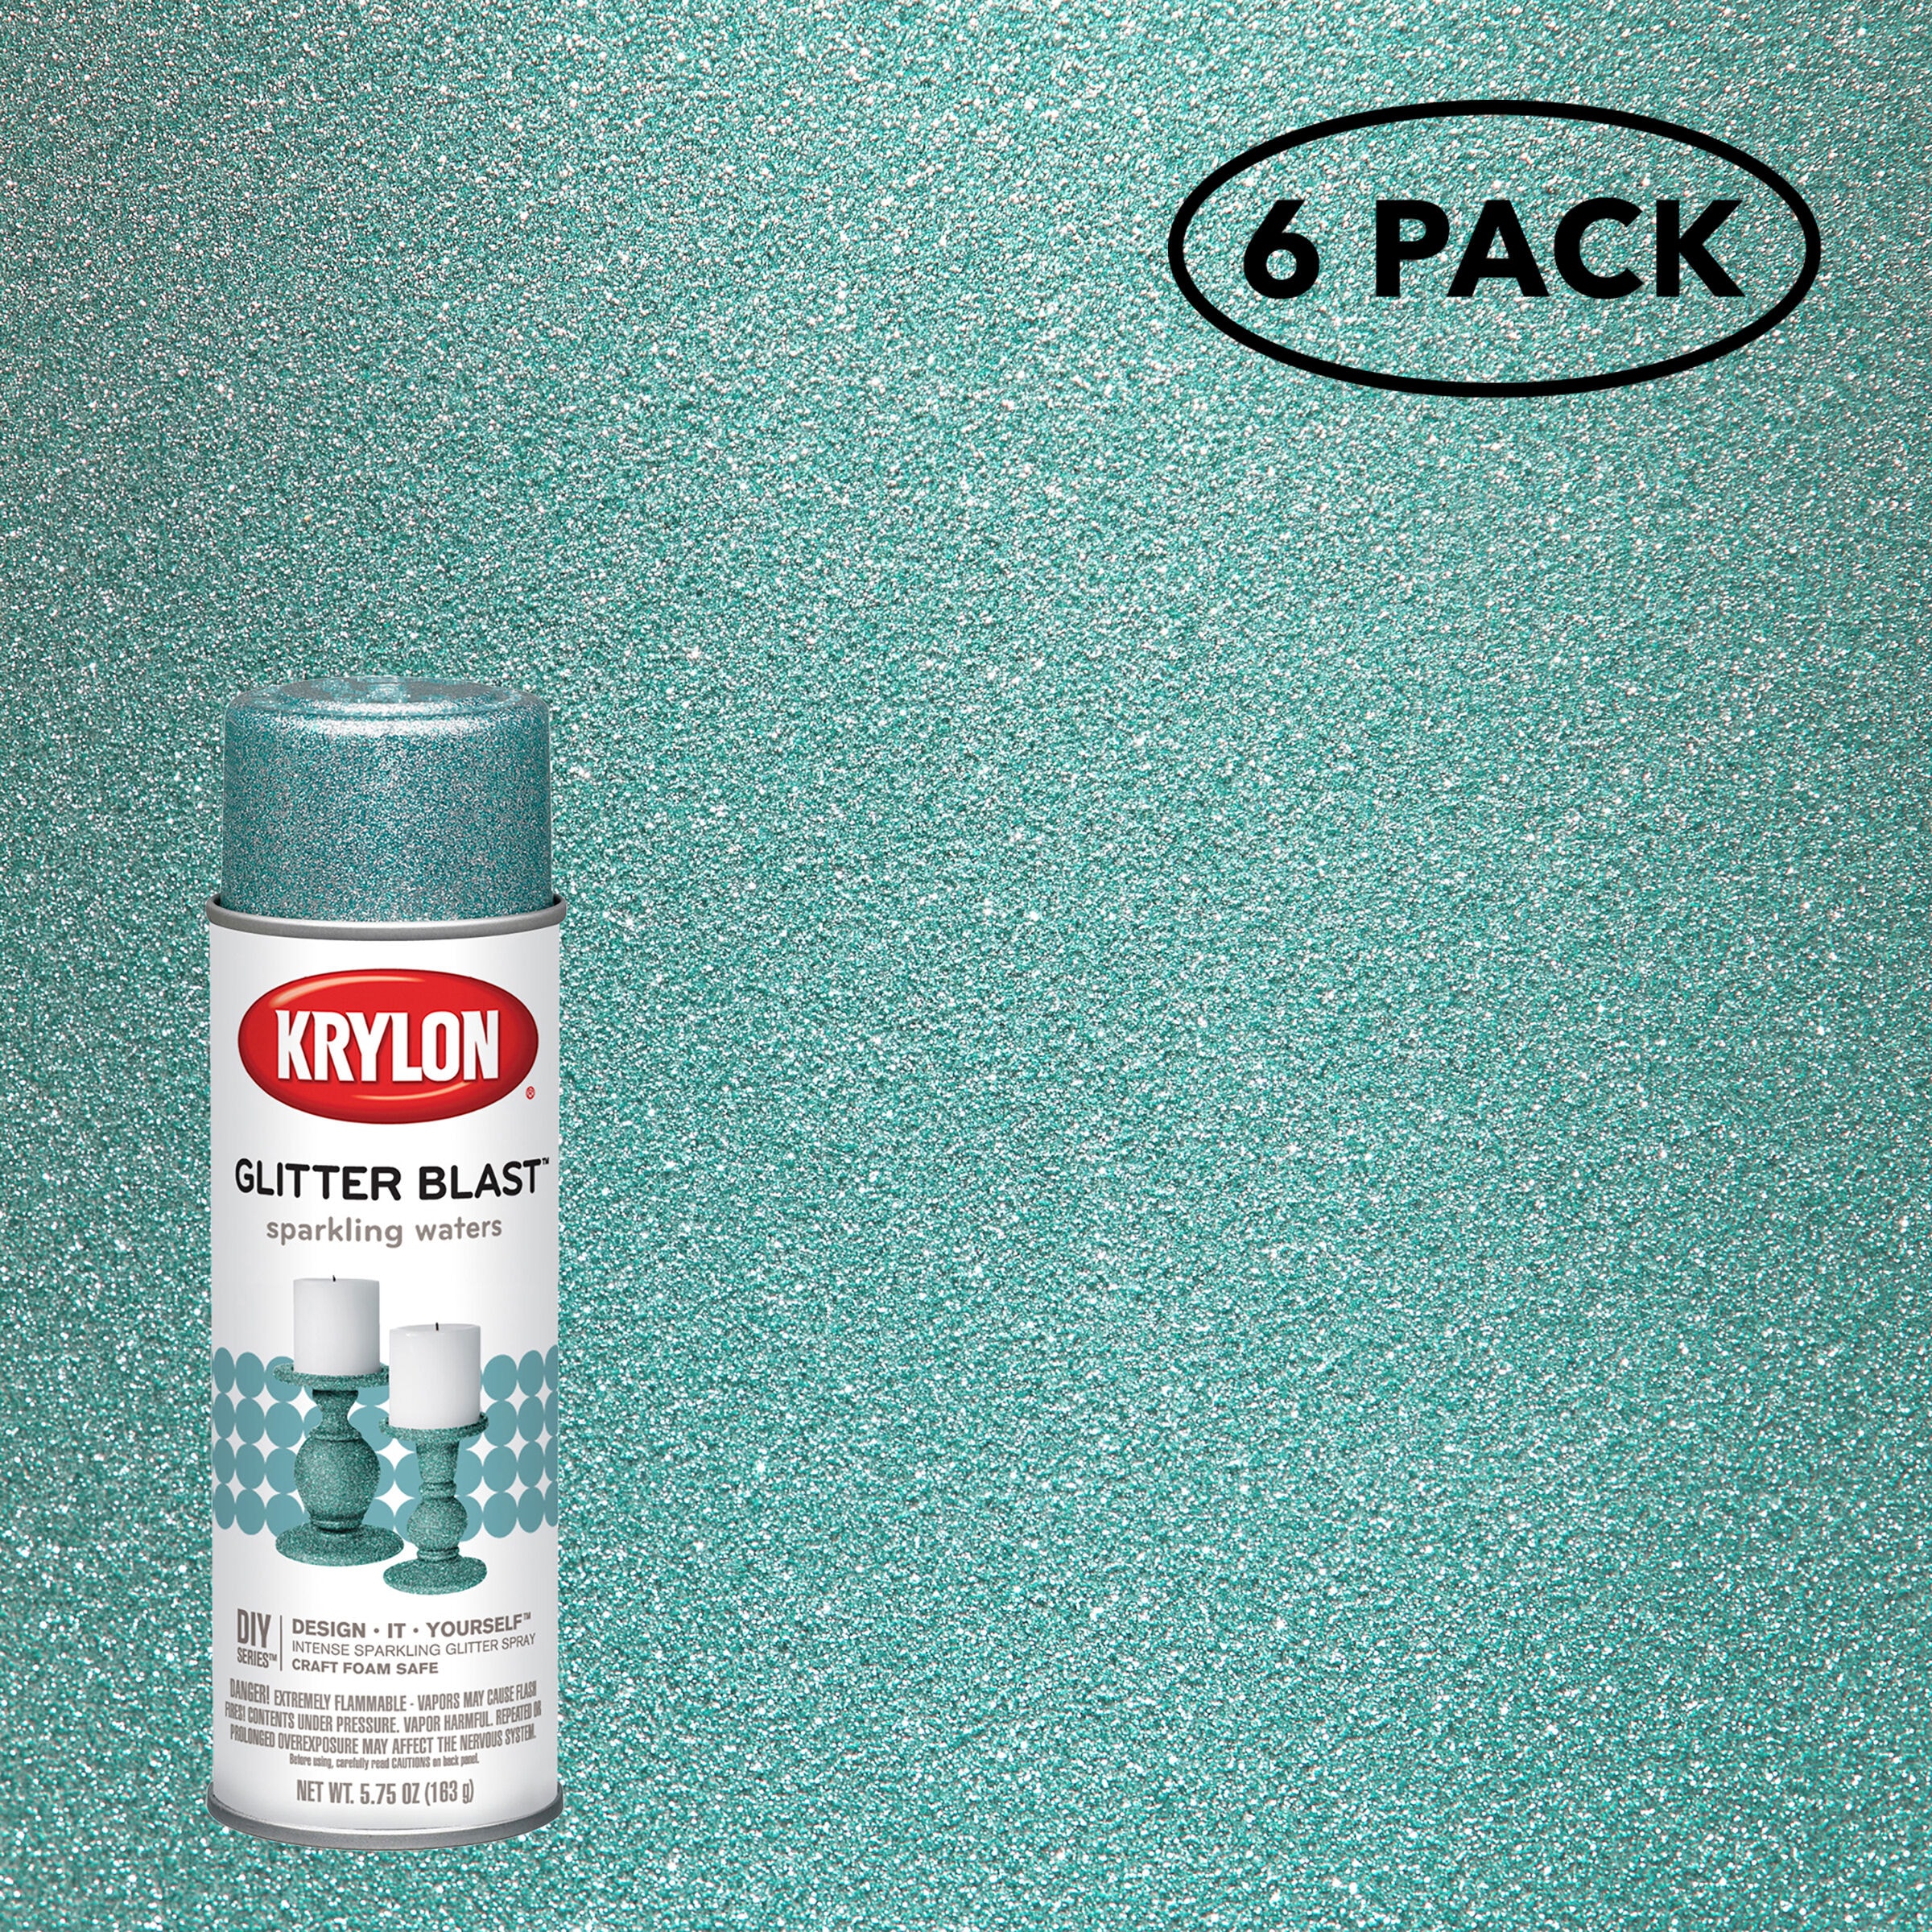 Krylon K03804A00 Glitter Blast Glitter Spray Paint for Craft Projects,  Diamond Dust, 5.75 oz Diamond Dust